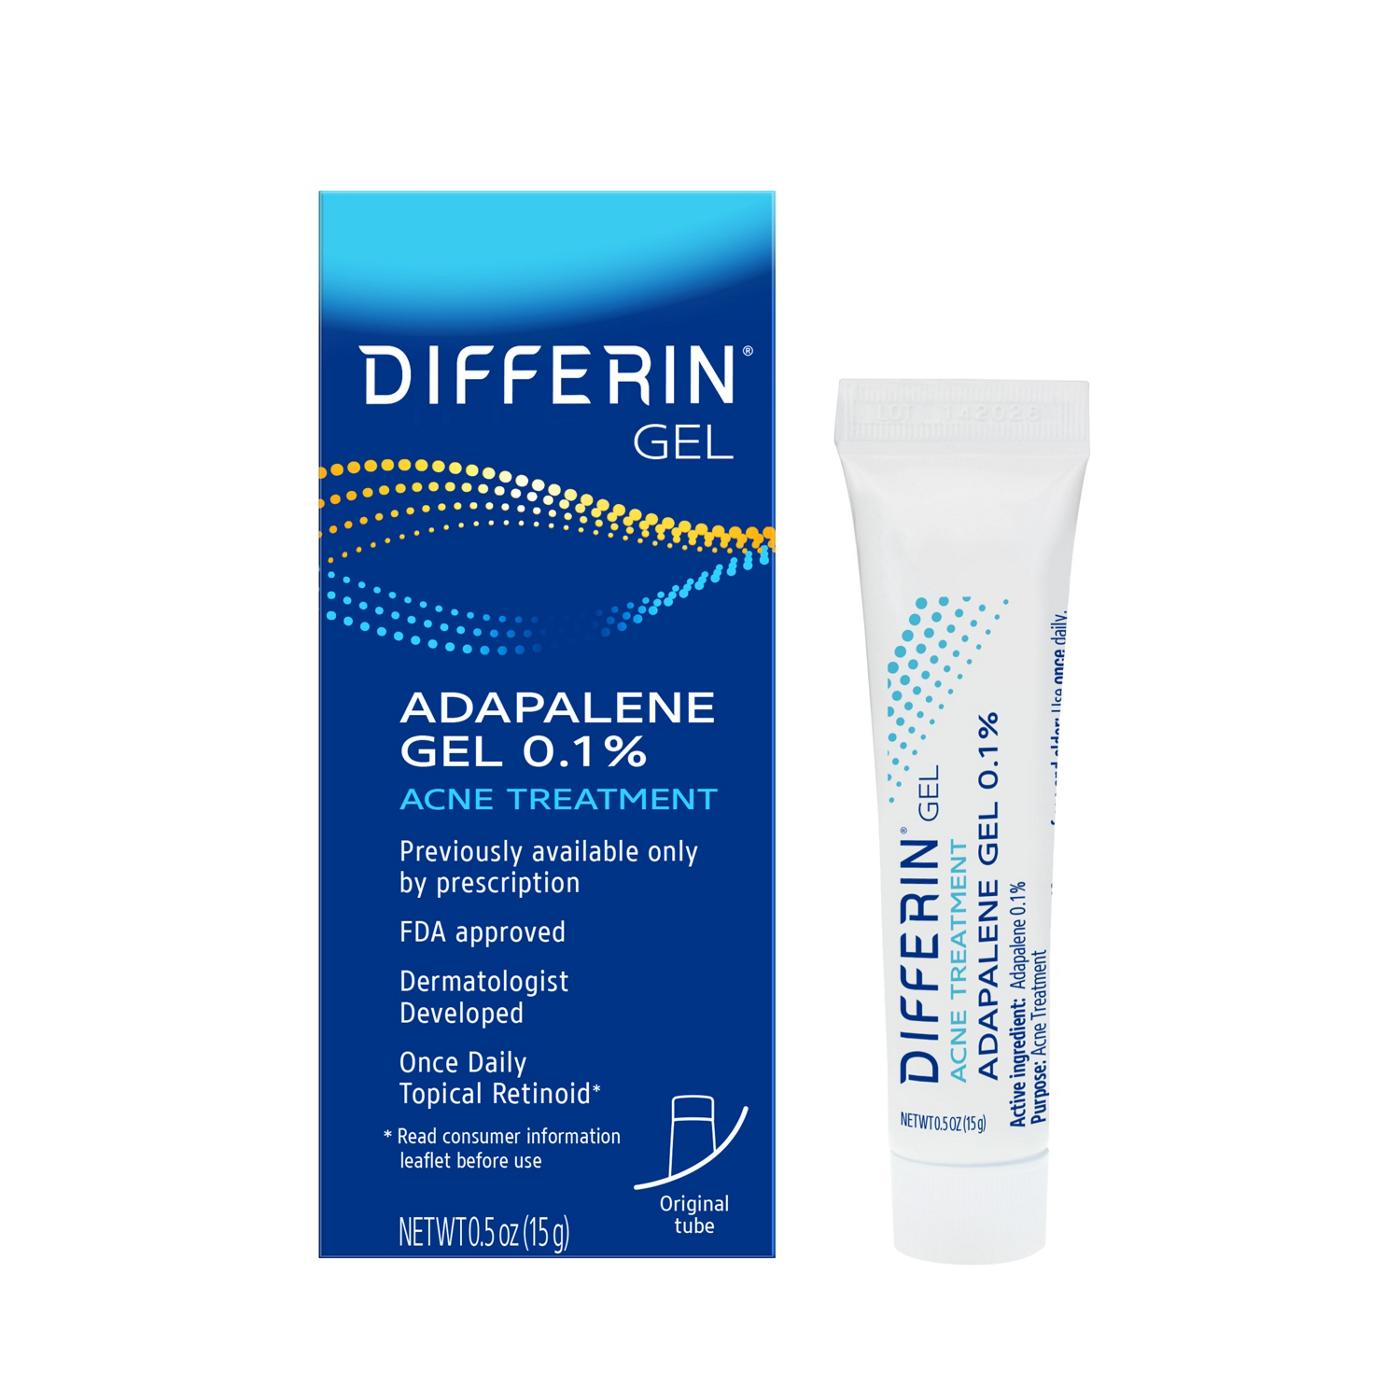 Differin Gel Acne Treatment 0.1% Adapalene; image 6 of 6